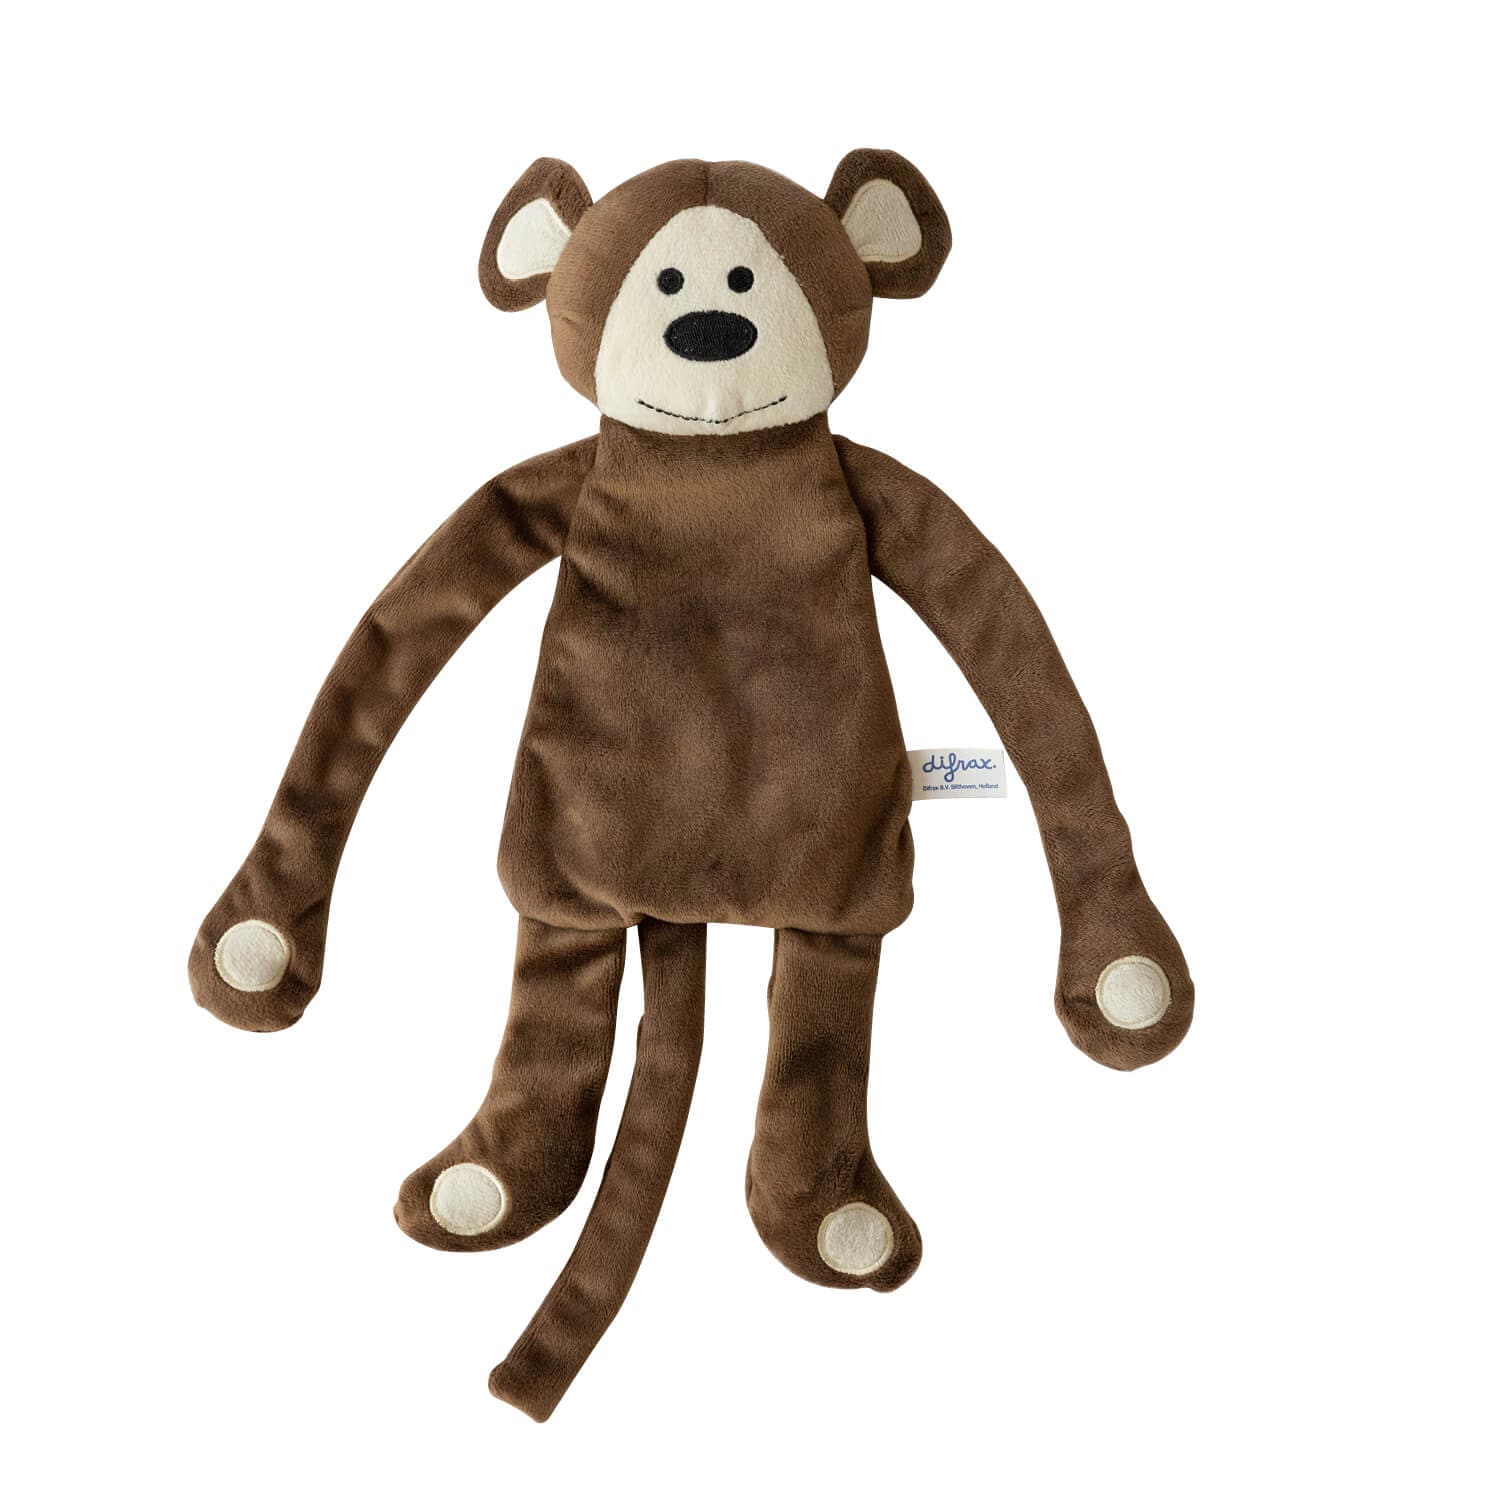 Monkey Mario -Flat plush cuddly toy - Soft